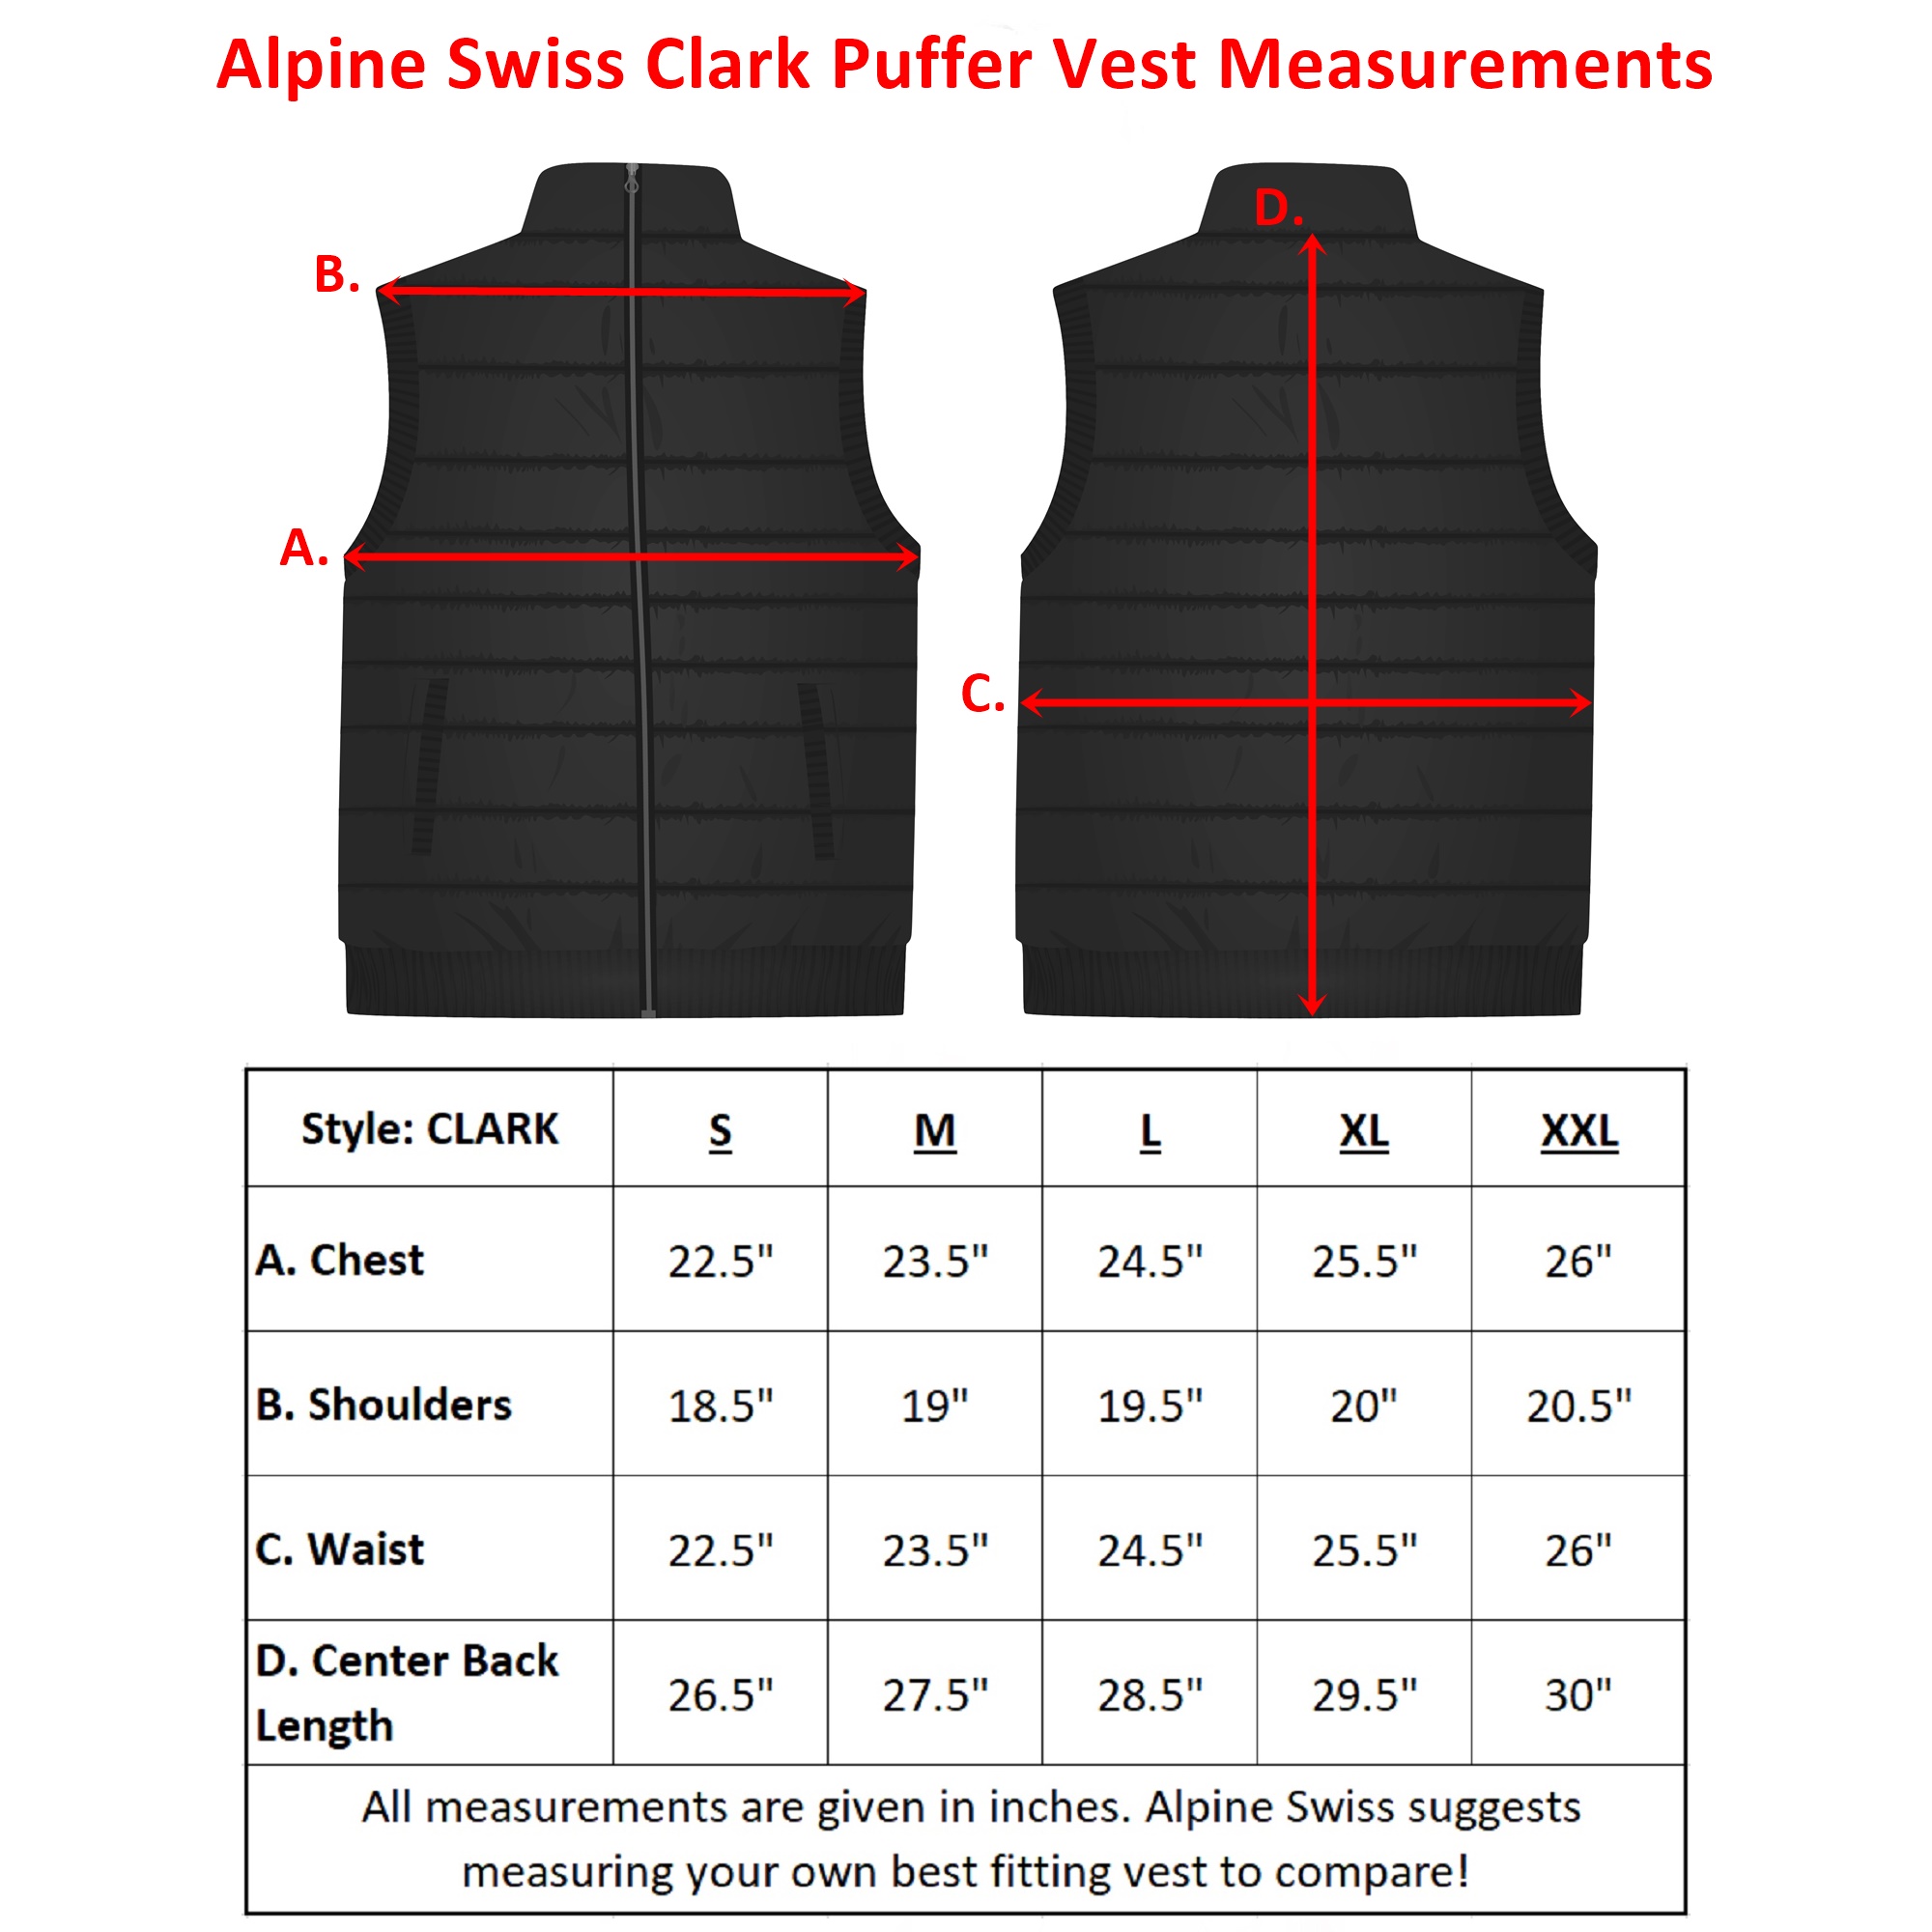 Alpine Swiss Mens Down Alternative Vest Jacket Lightweight Packable Puffer Vest - image 6 of 7